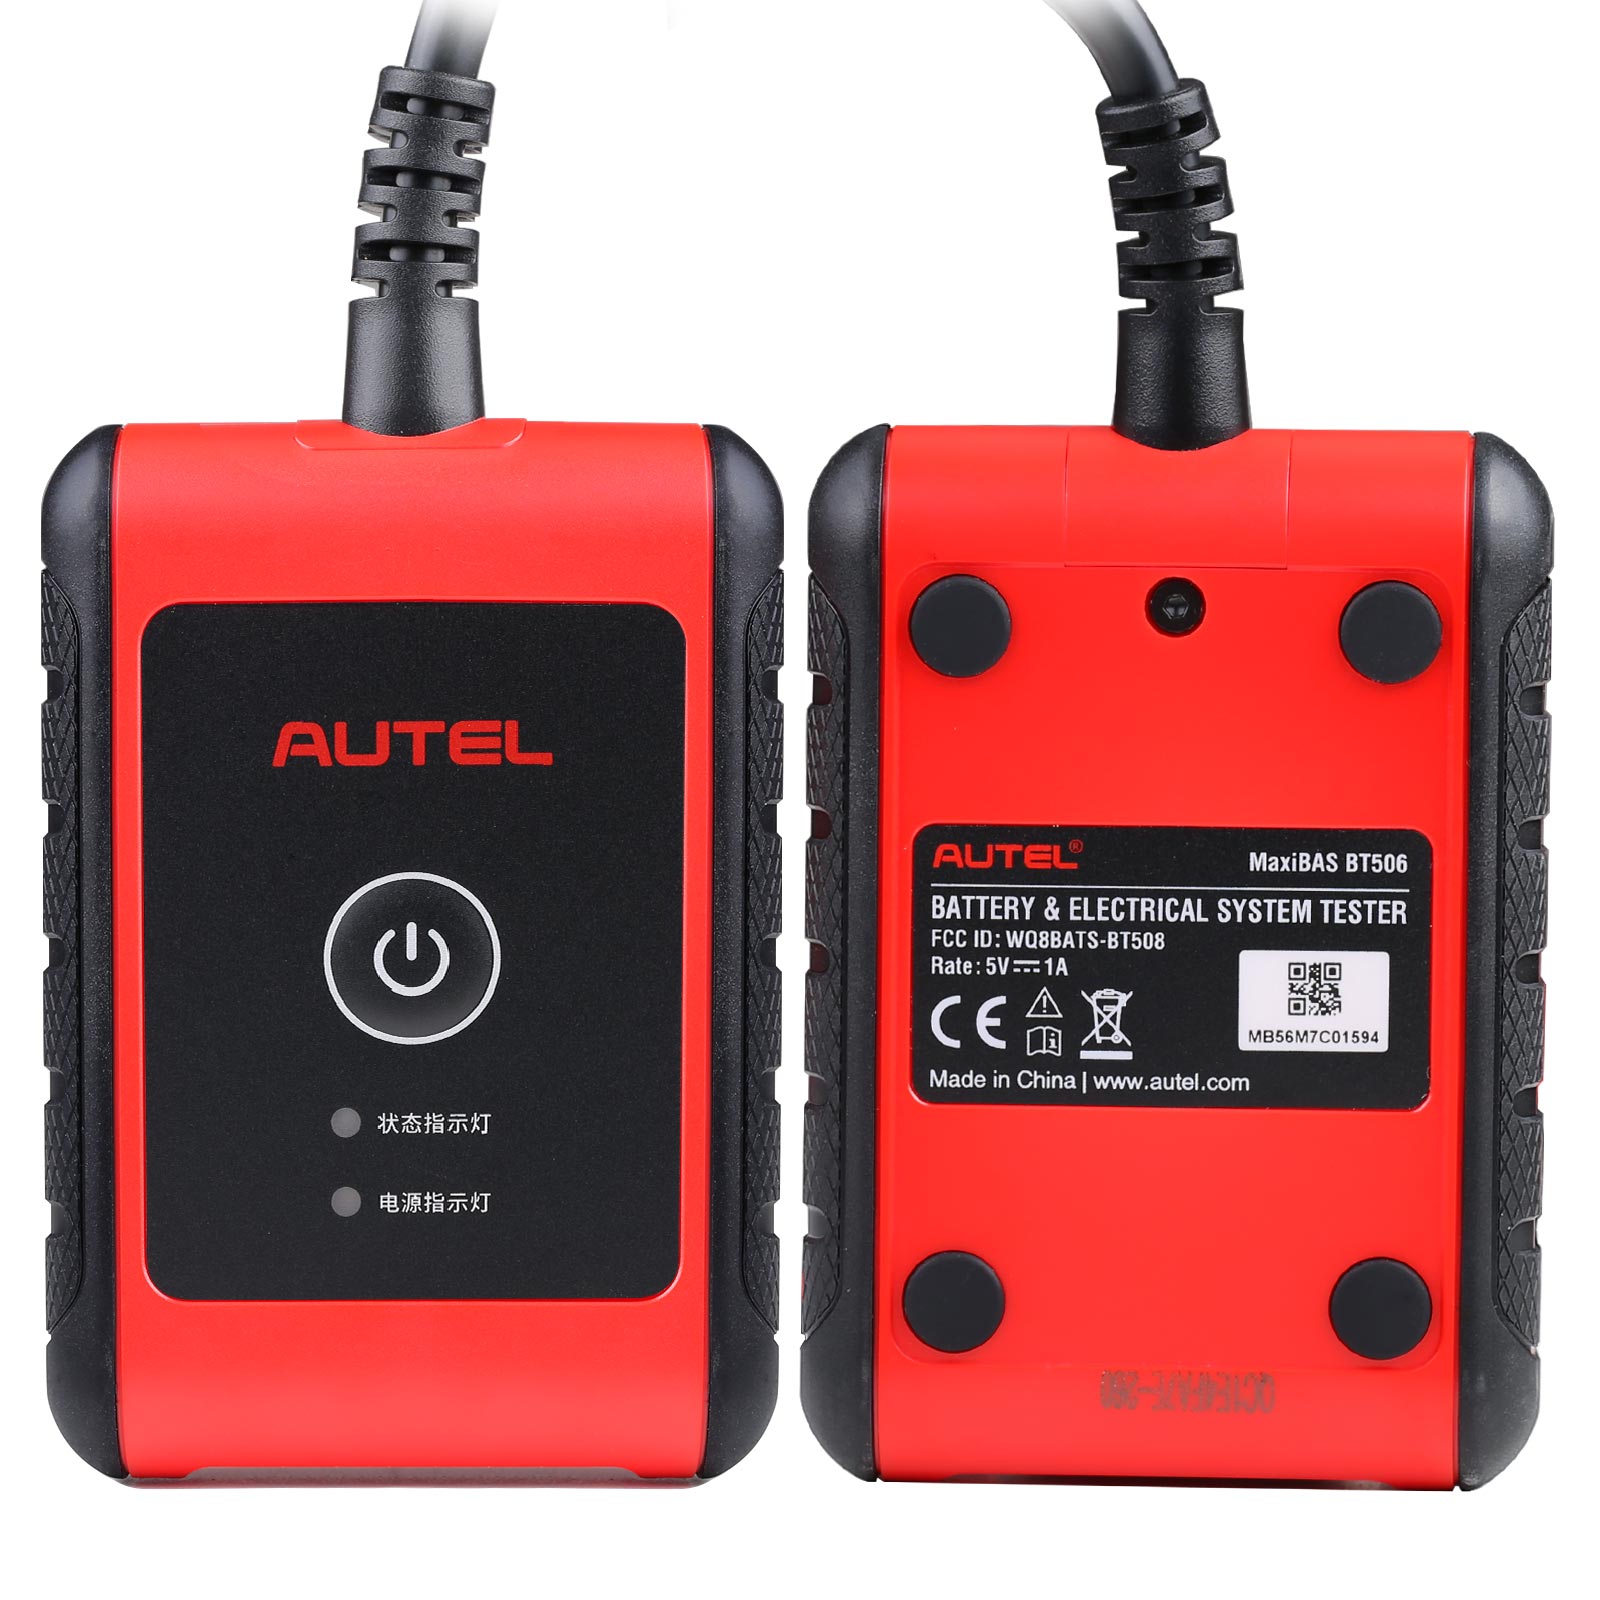 Autel MaxiBAS BT506 Auto Car Battery & Electrical System Analysis Tester Tool 